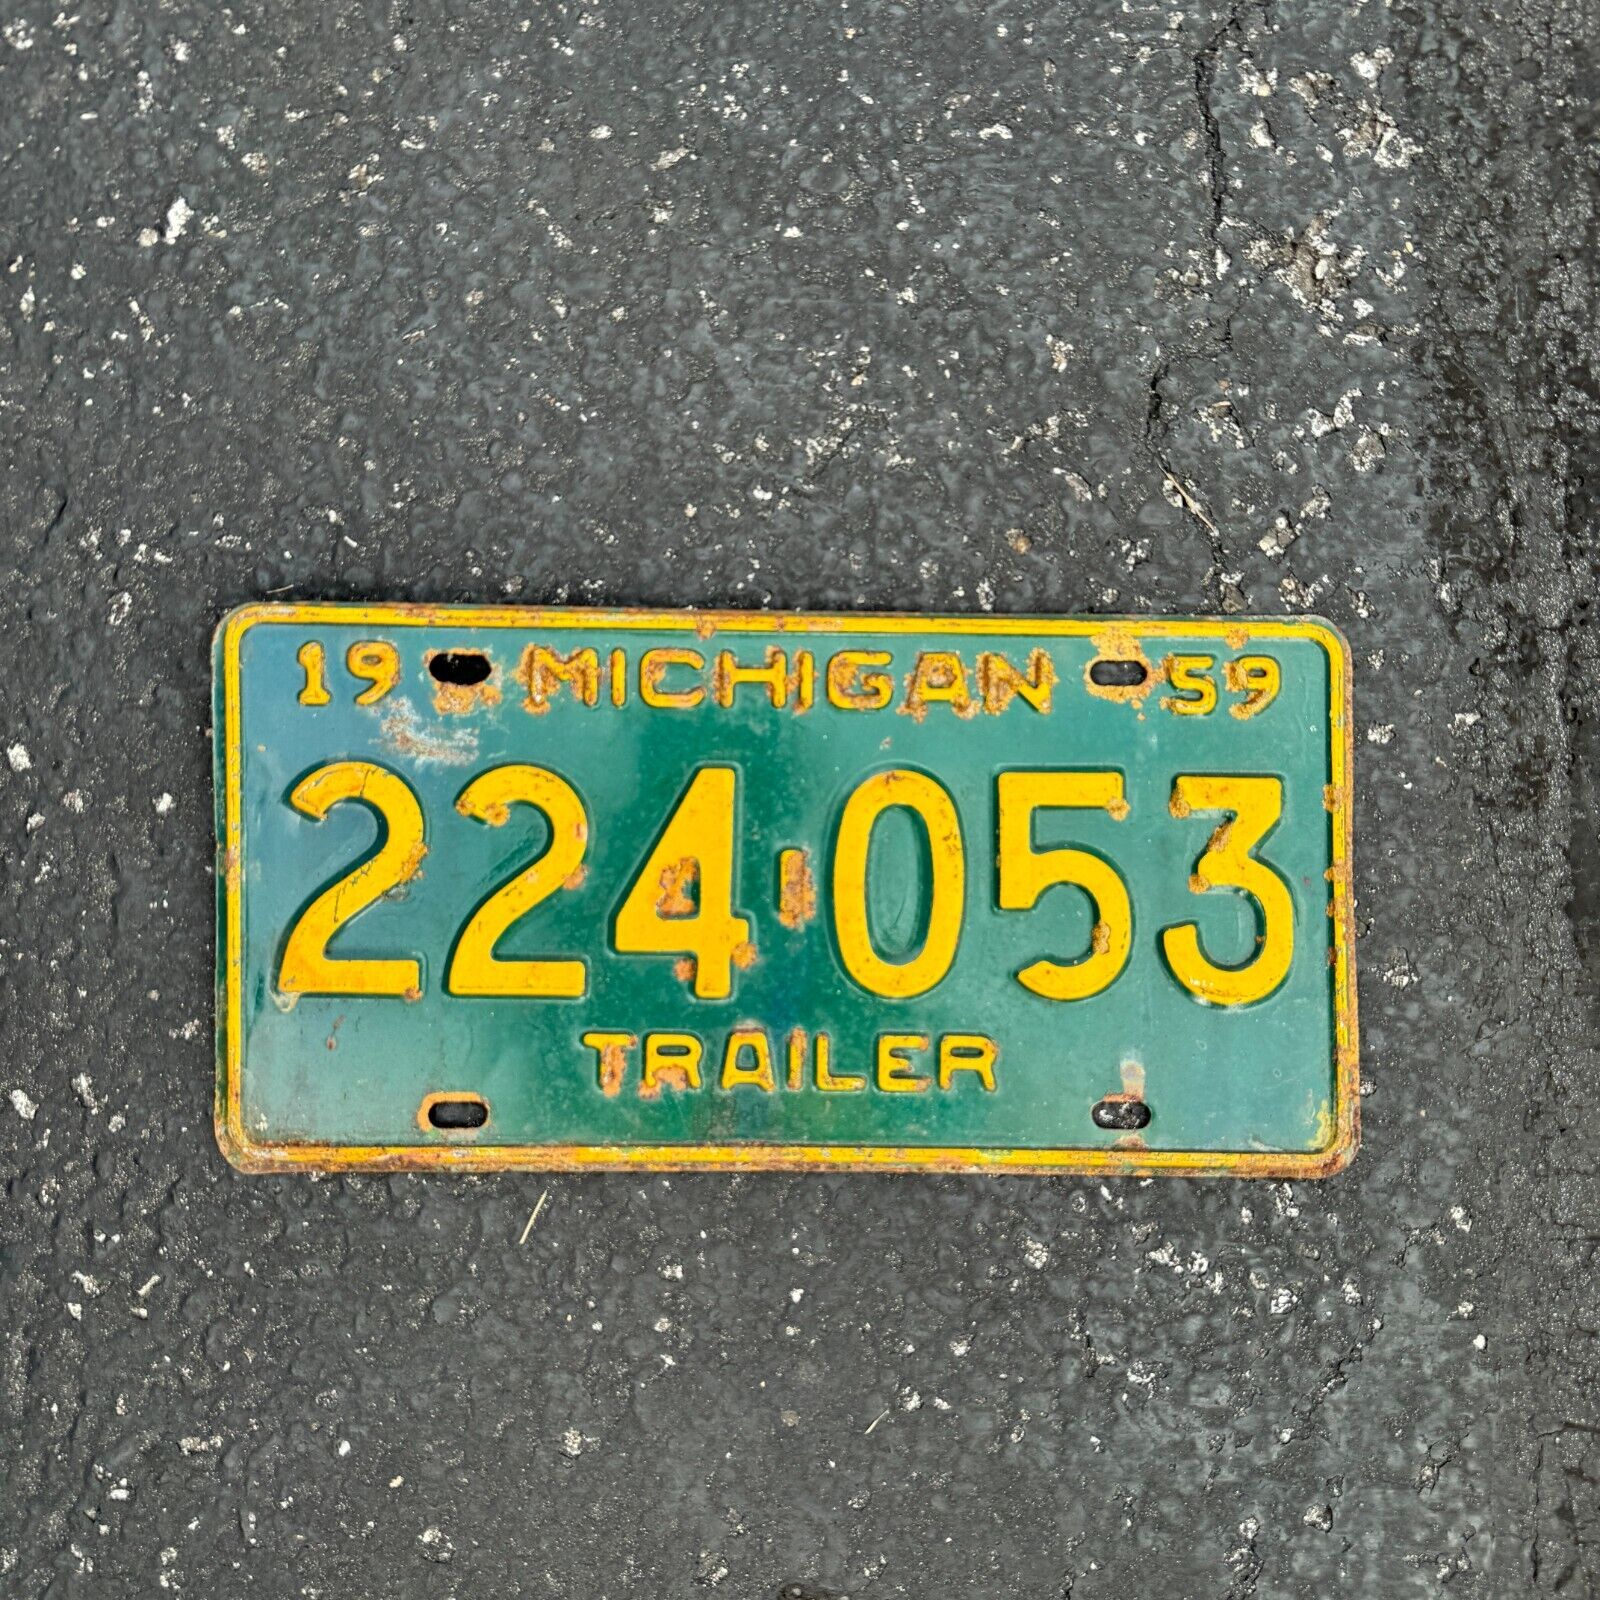 1959 Michigan Trailer License Plate Vintage Auto Tag Garage Decor 224 053